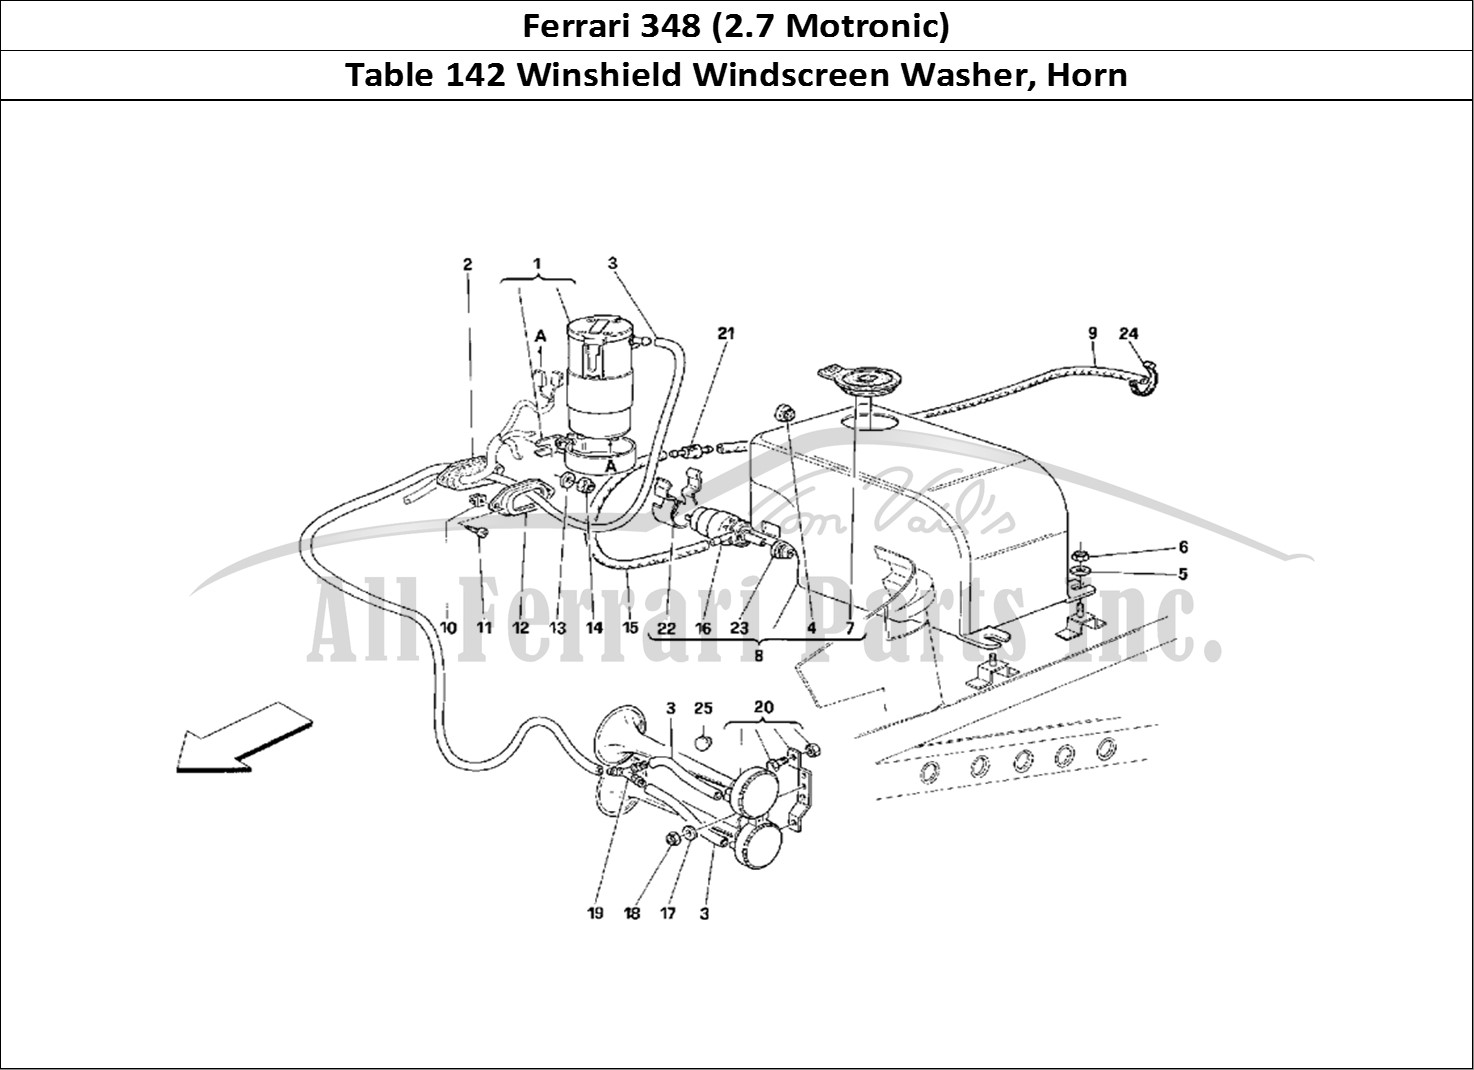 Ferrari Parts Ferrari 348 (2.7 Motronic) Page 142 Glass Washer and Horns